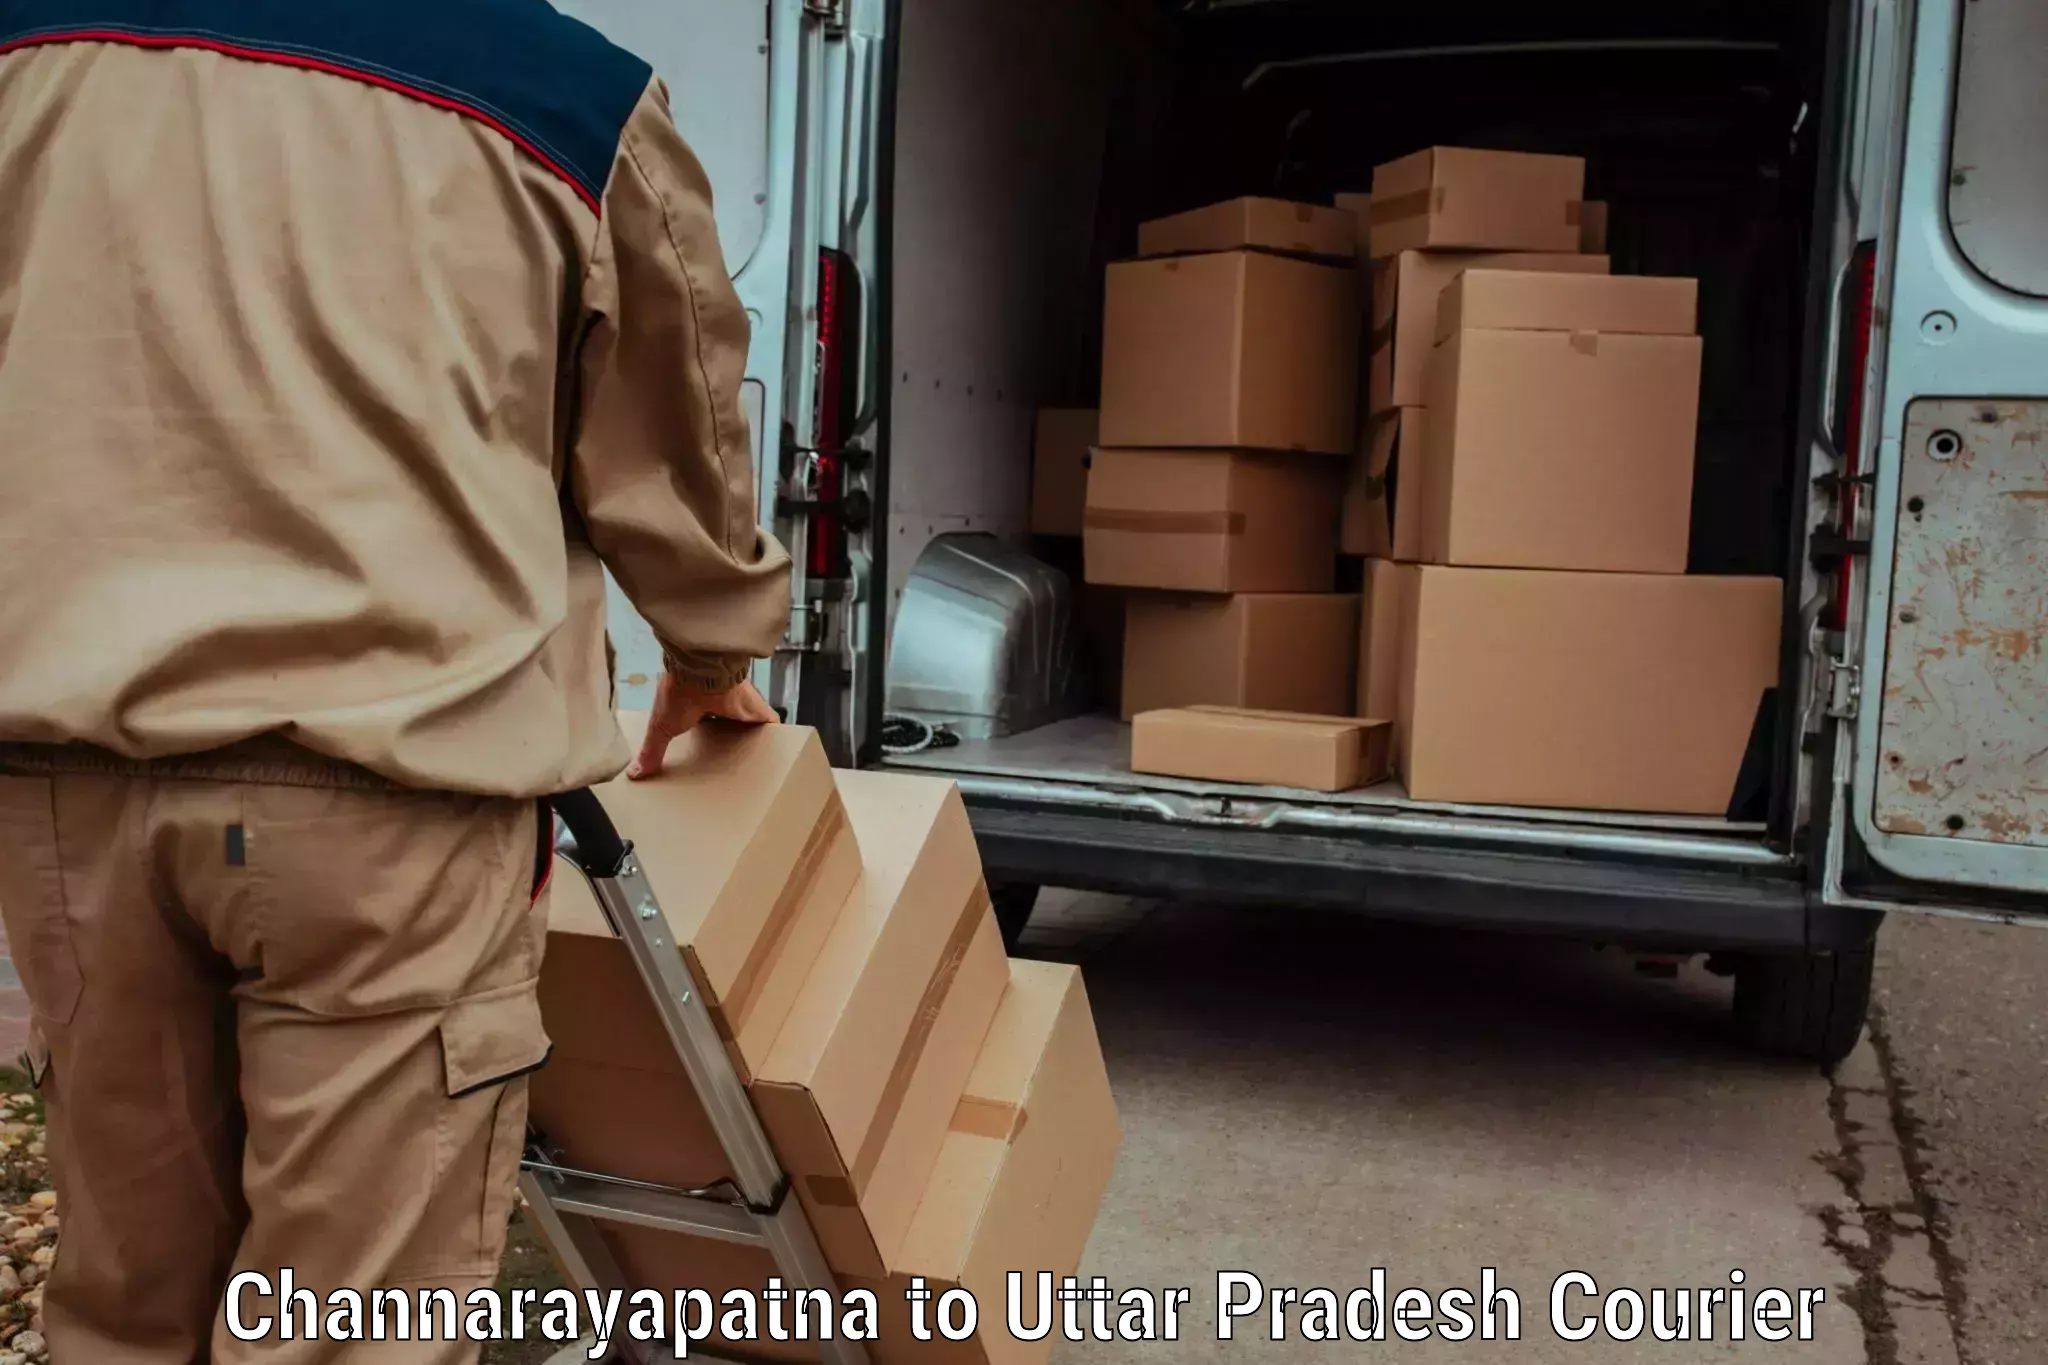 Multi-service courier options Channarayapatna to Ambuj Nagar